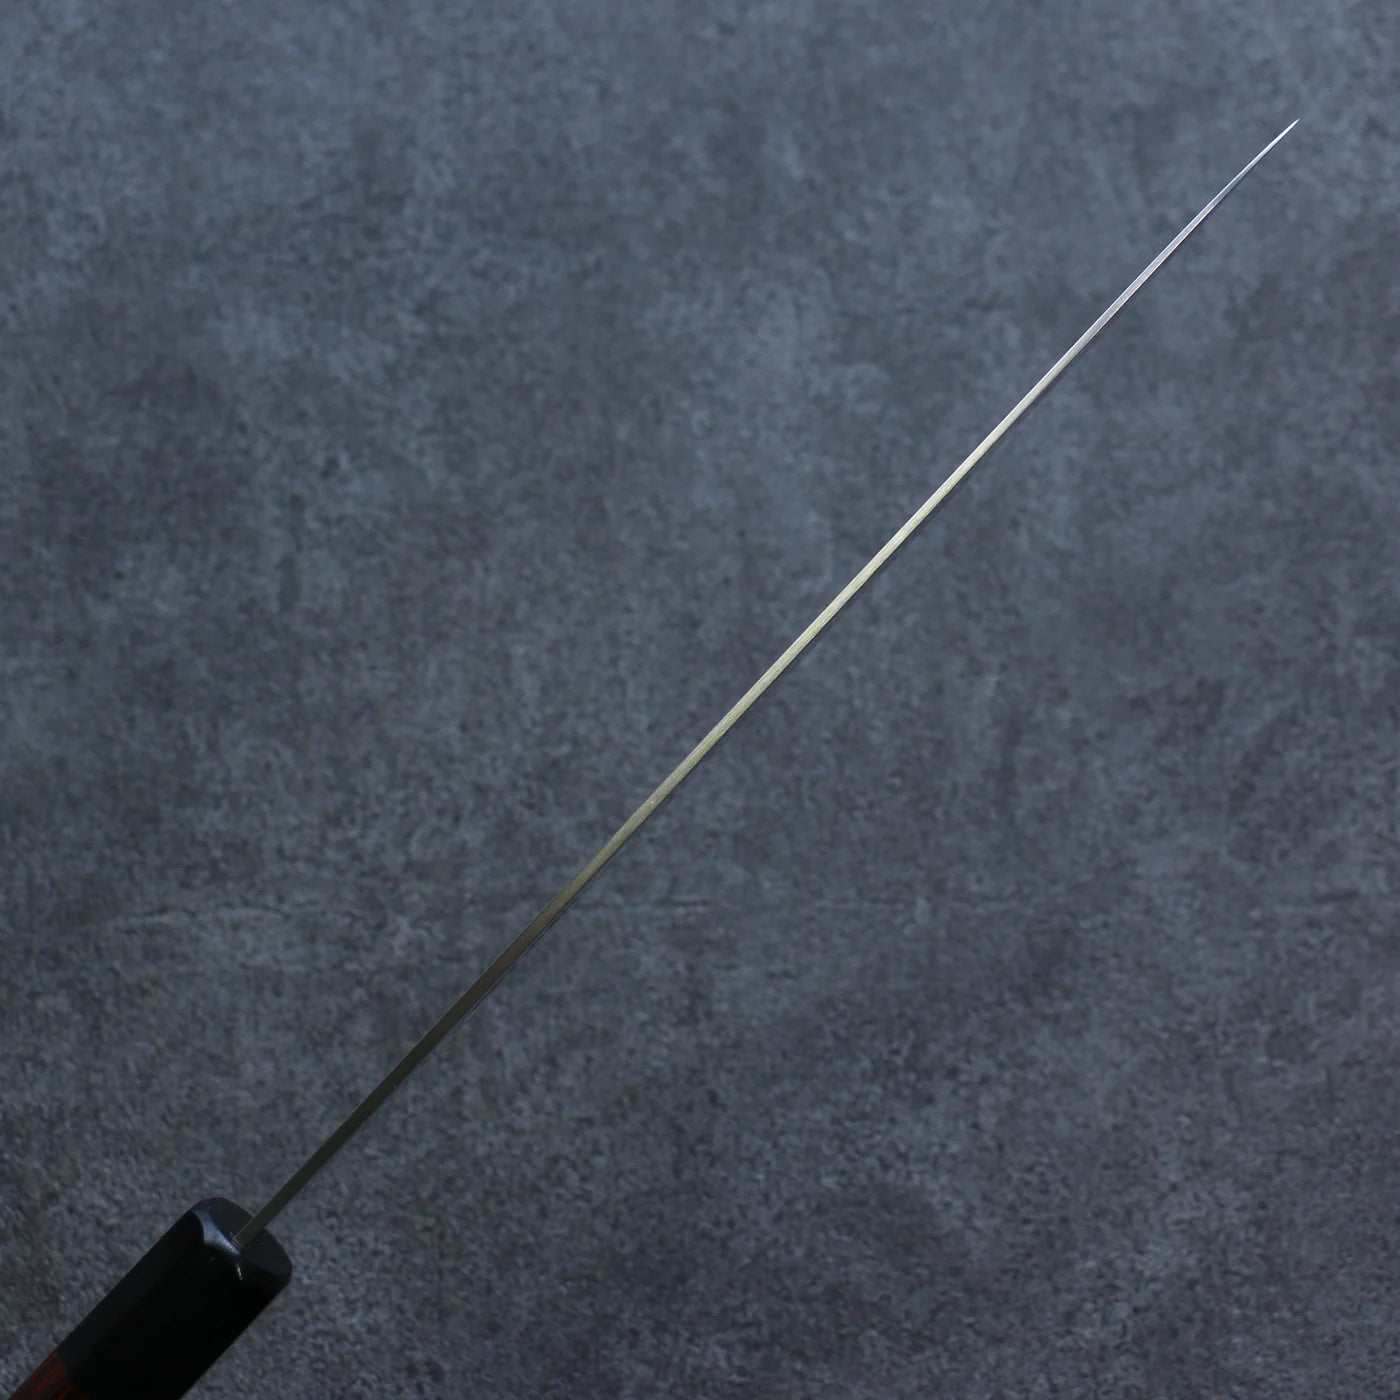 Japanisches Brotmesser der Marke Seisuke, 240 mm Edelstahl, roter Sperrholzgriff.